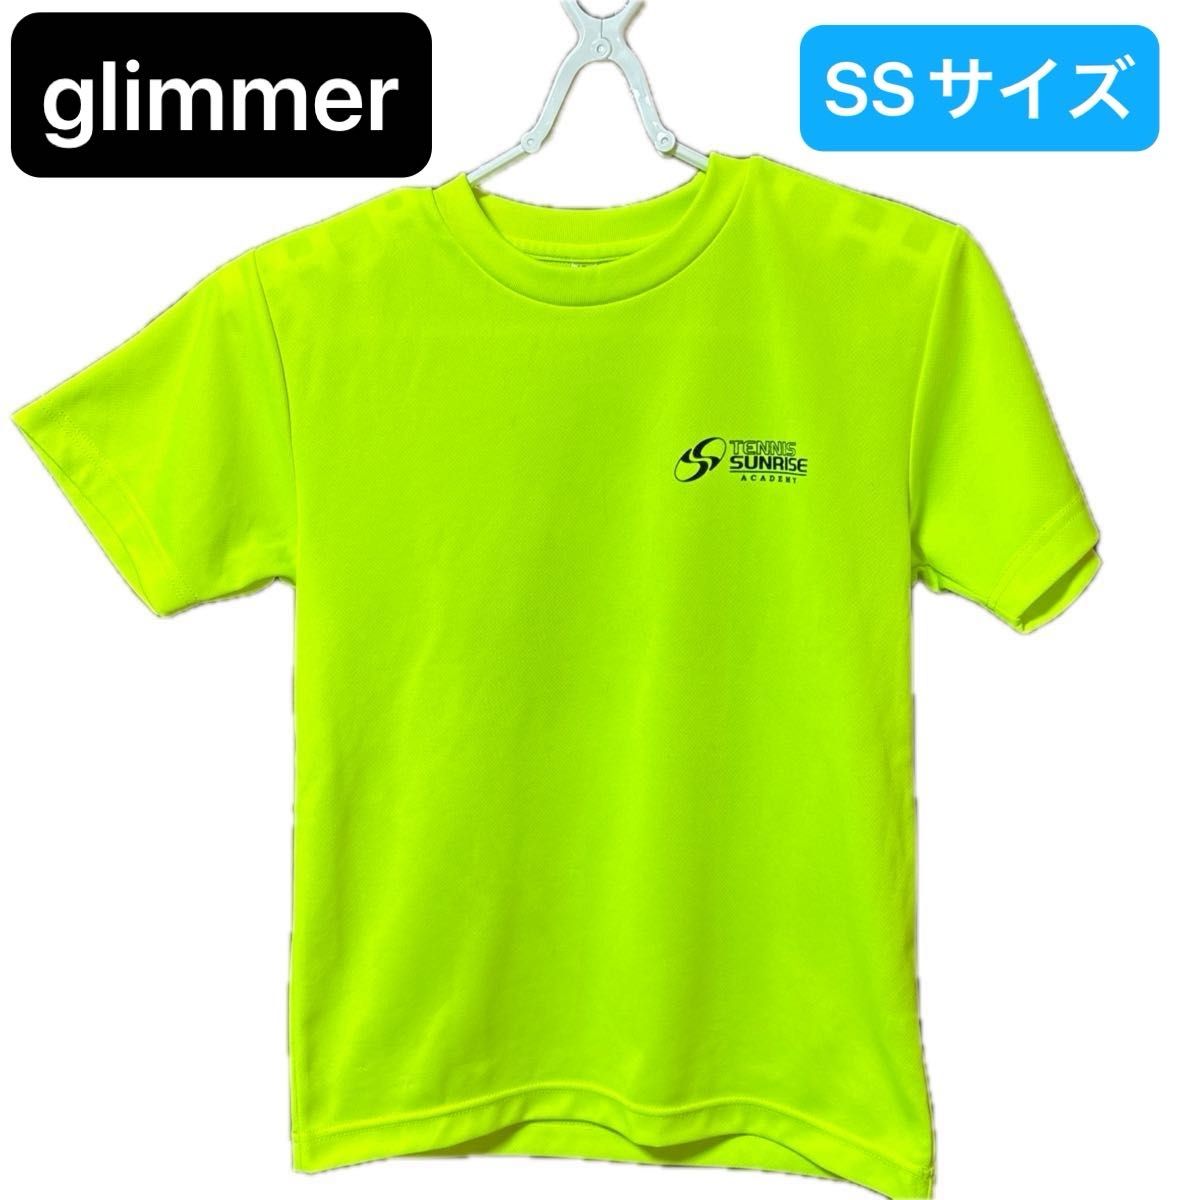 glimmer(グリマー) 半袖Tシャツ SSサイズ テニスサンライズアカデミー